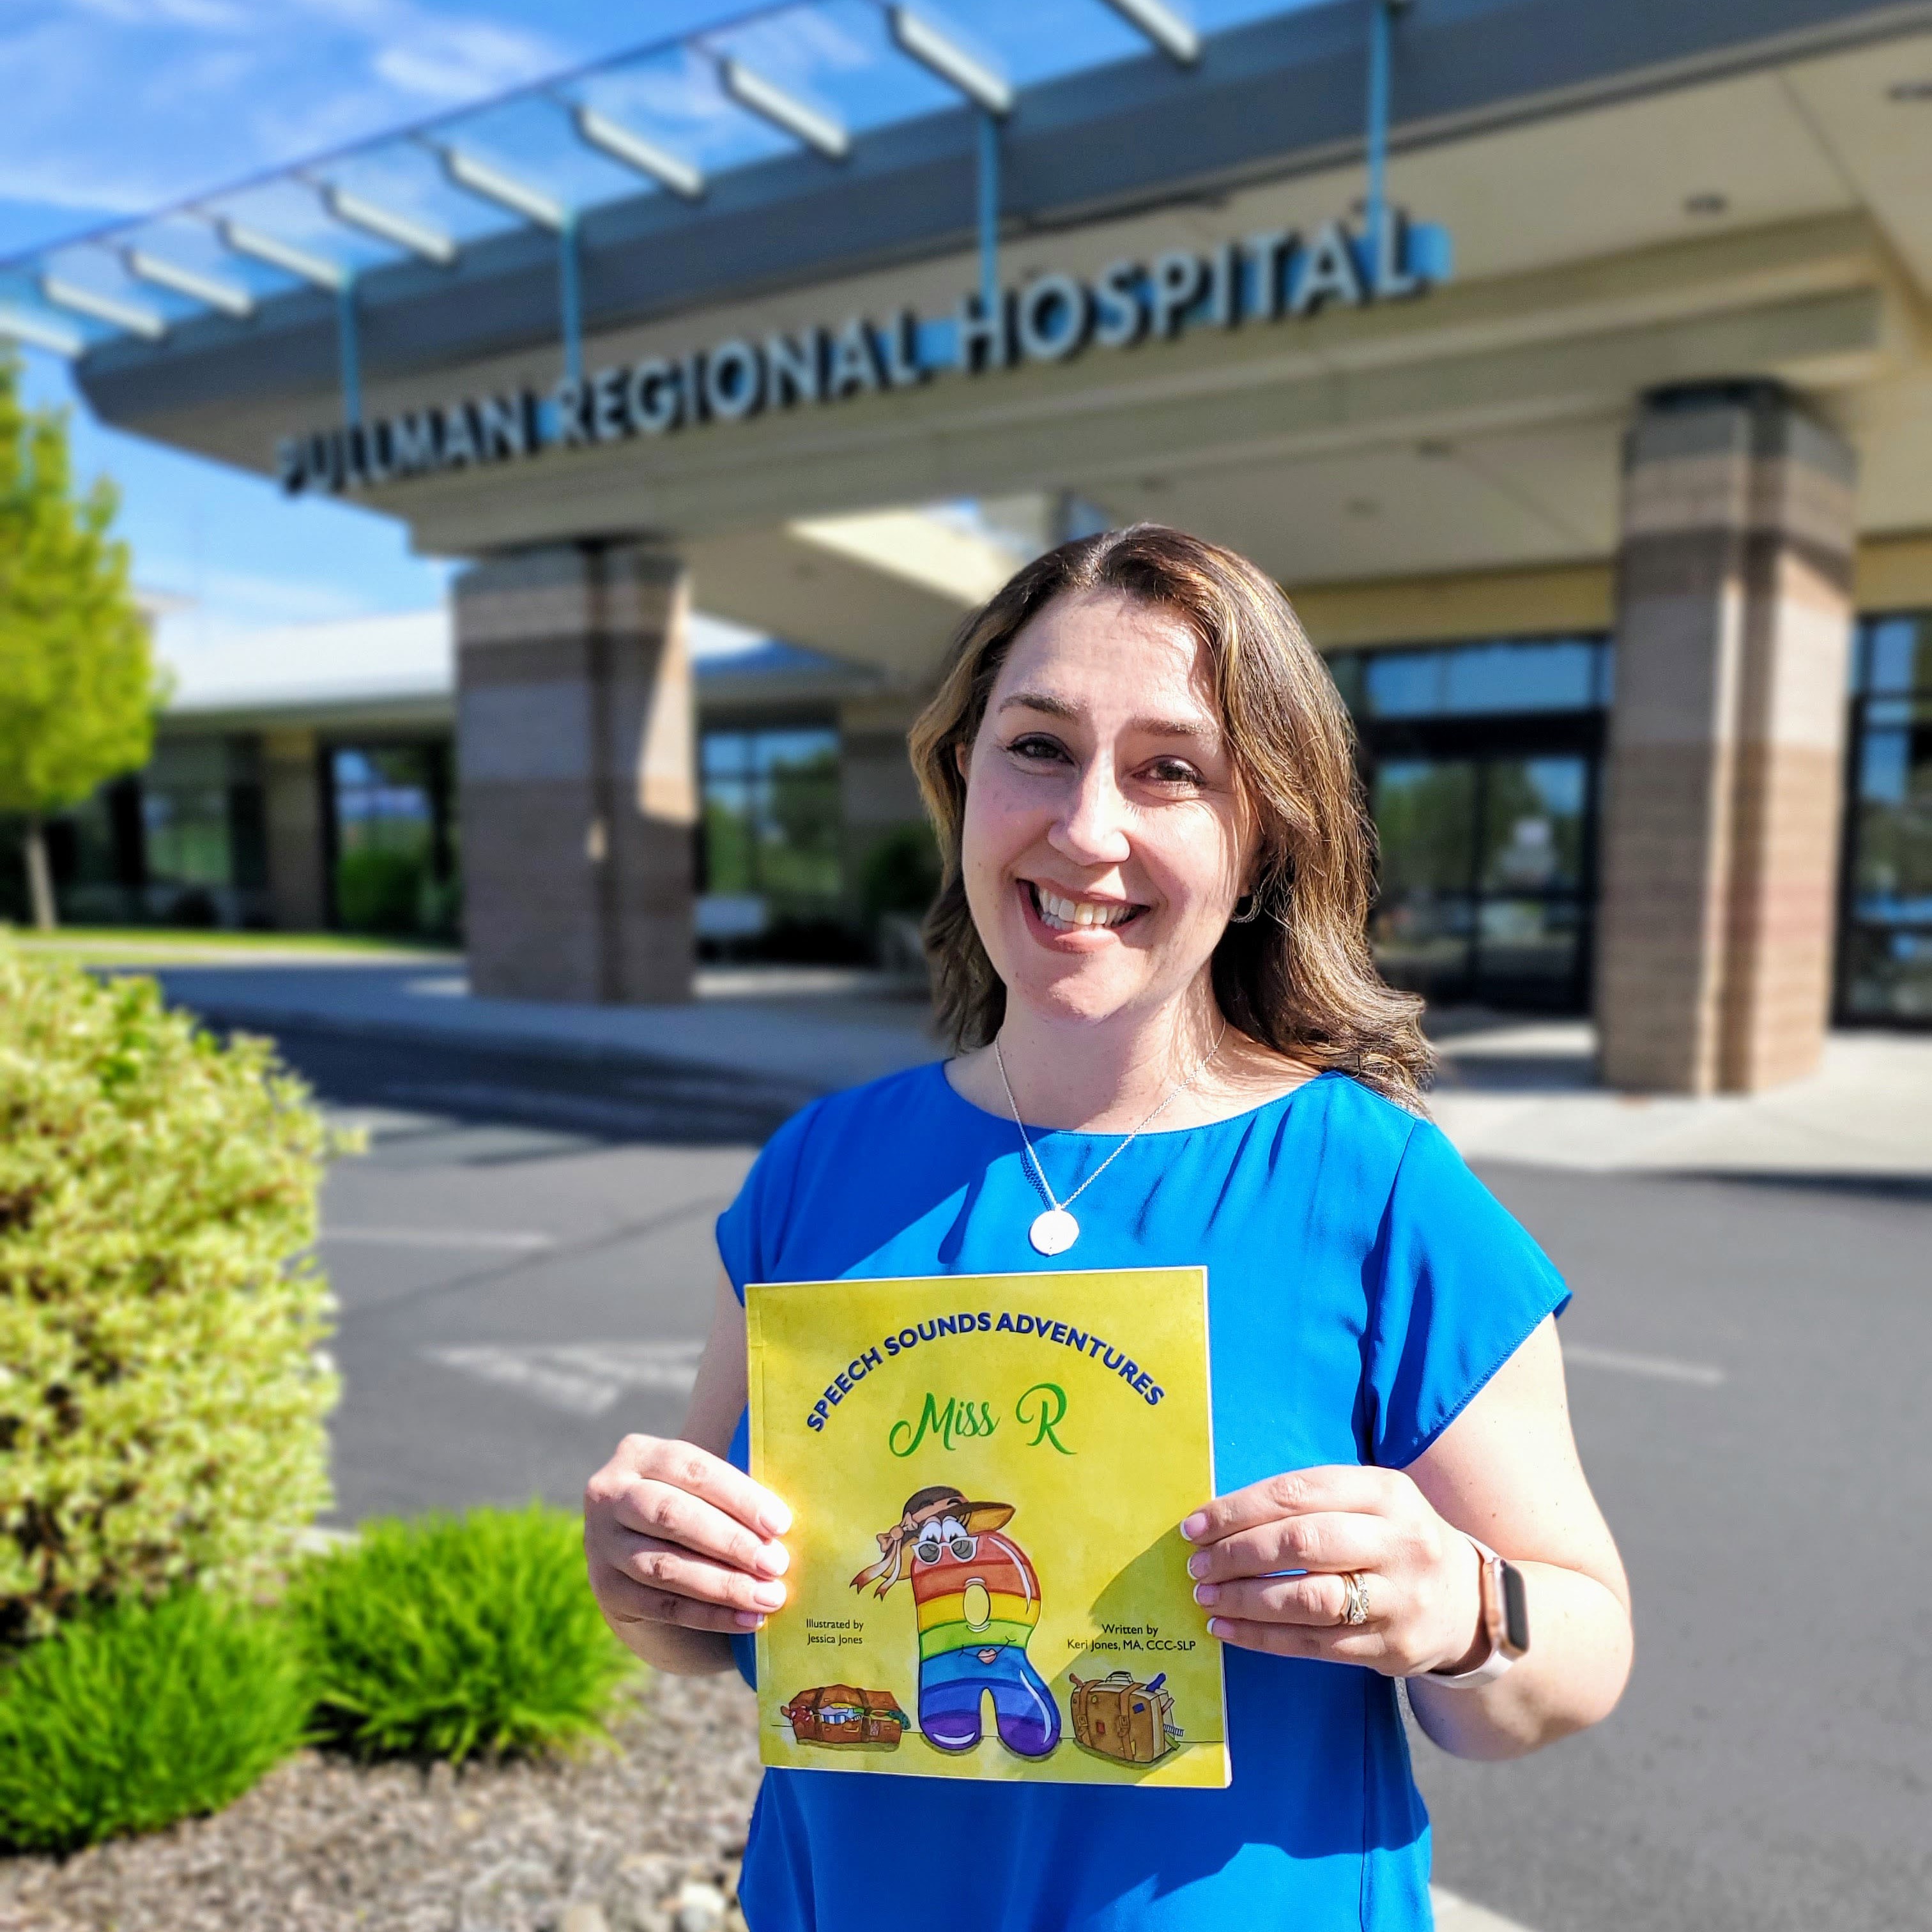 Pullman Regional Hospital Speech Language Pathologist Publishes Children’s Book